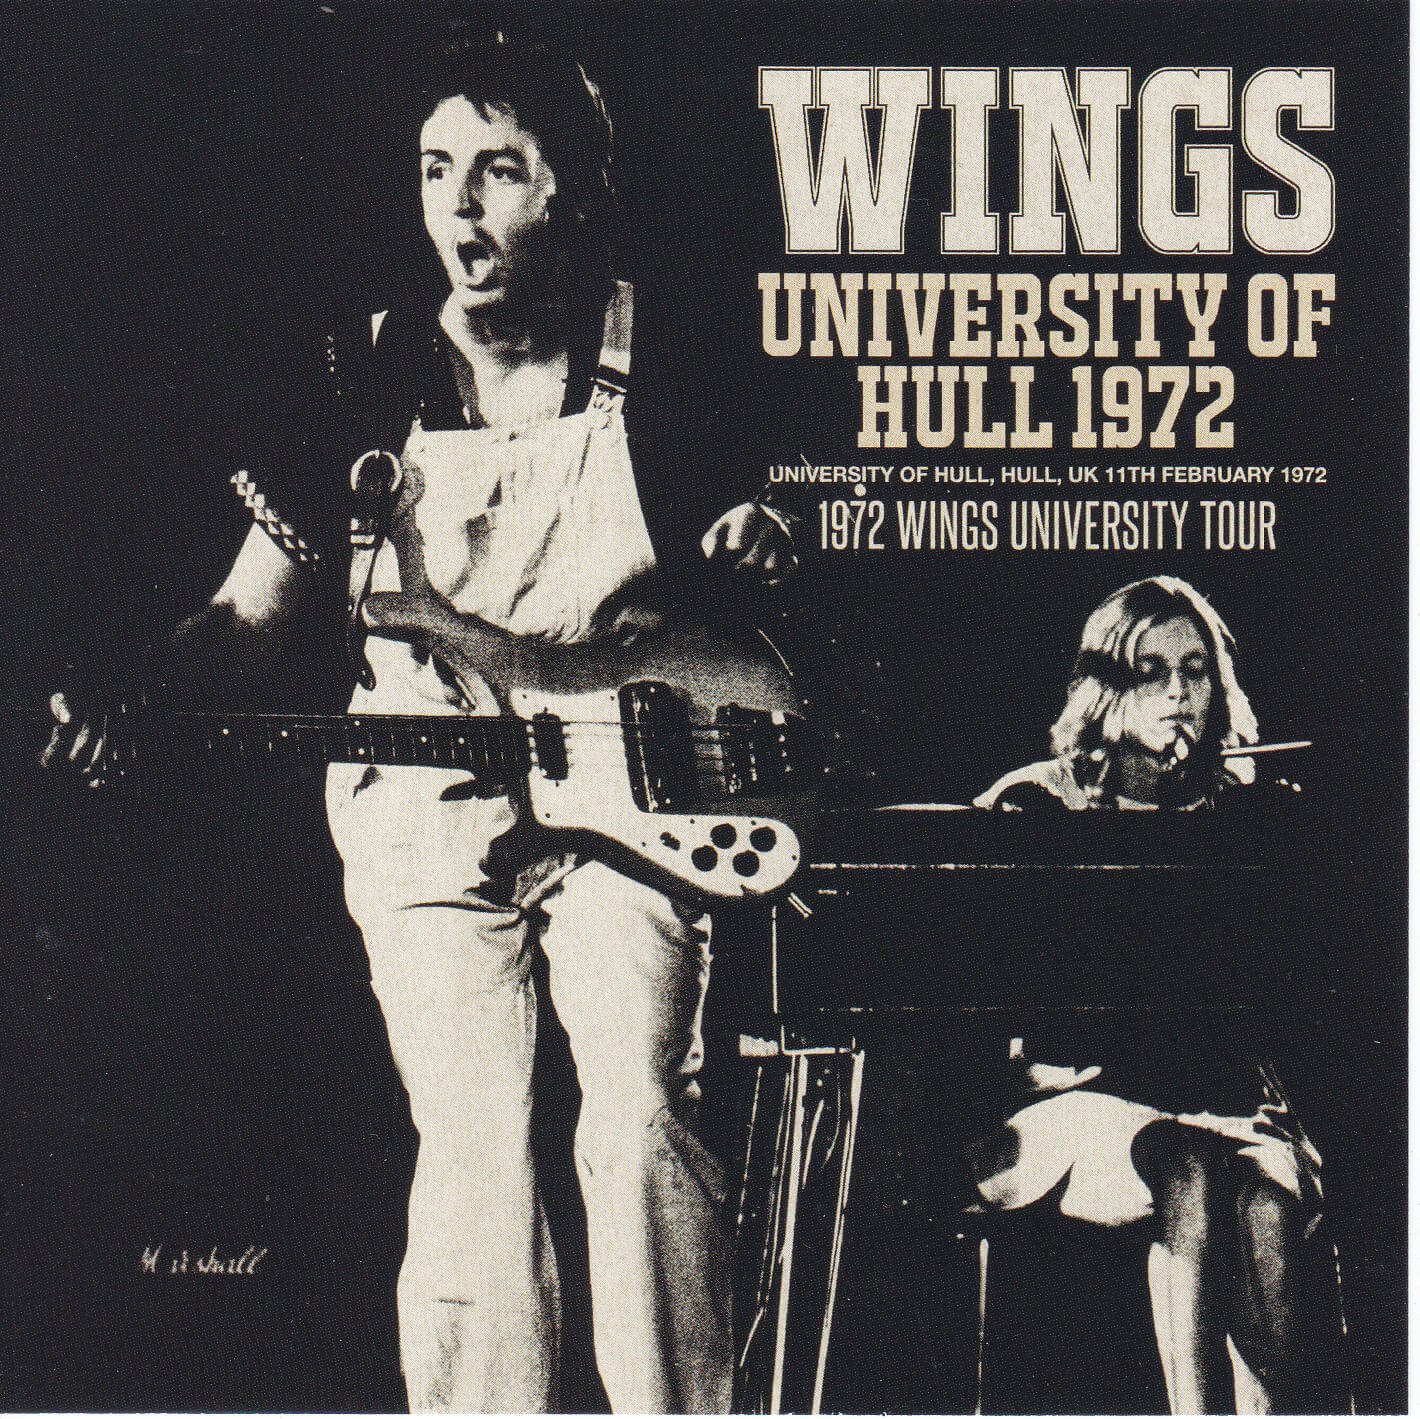 Paul McCartney And Wings University Tour Wallpaper